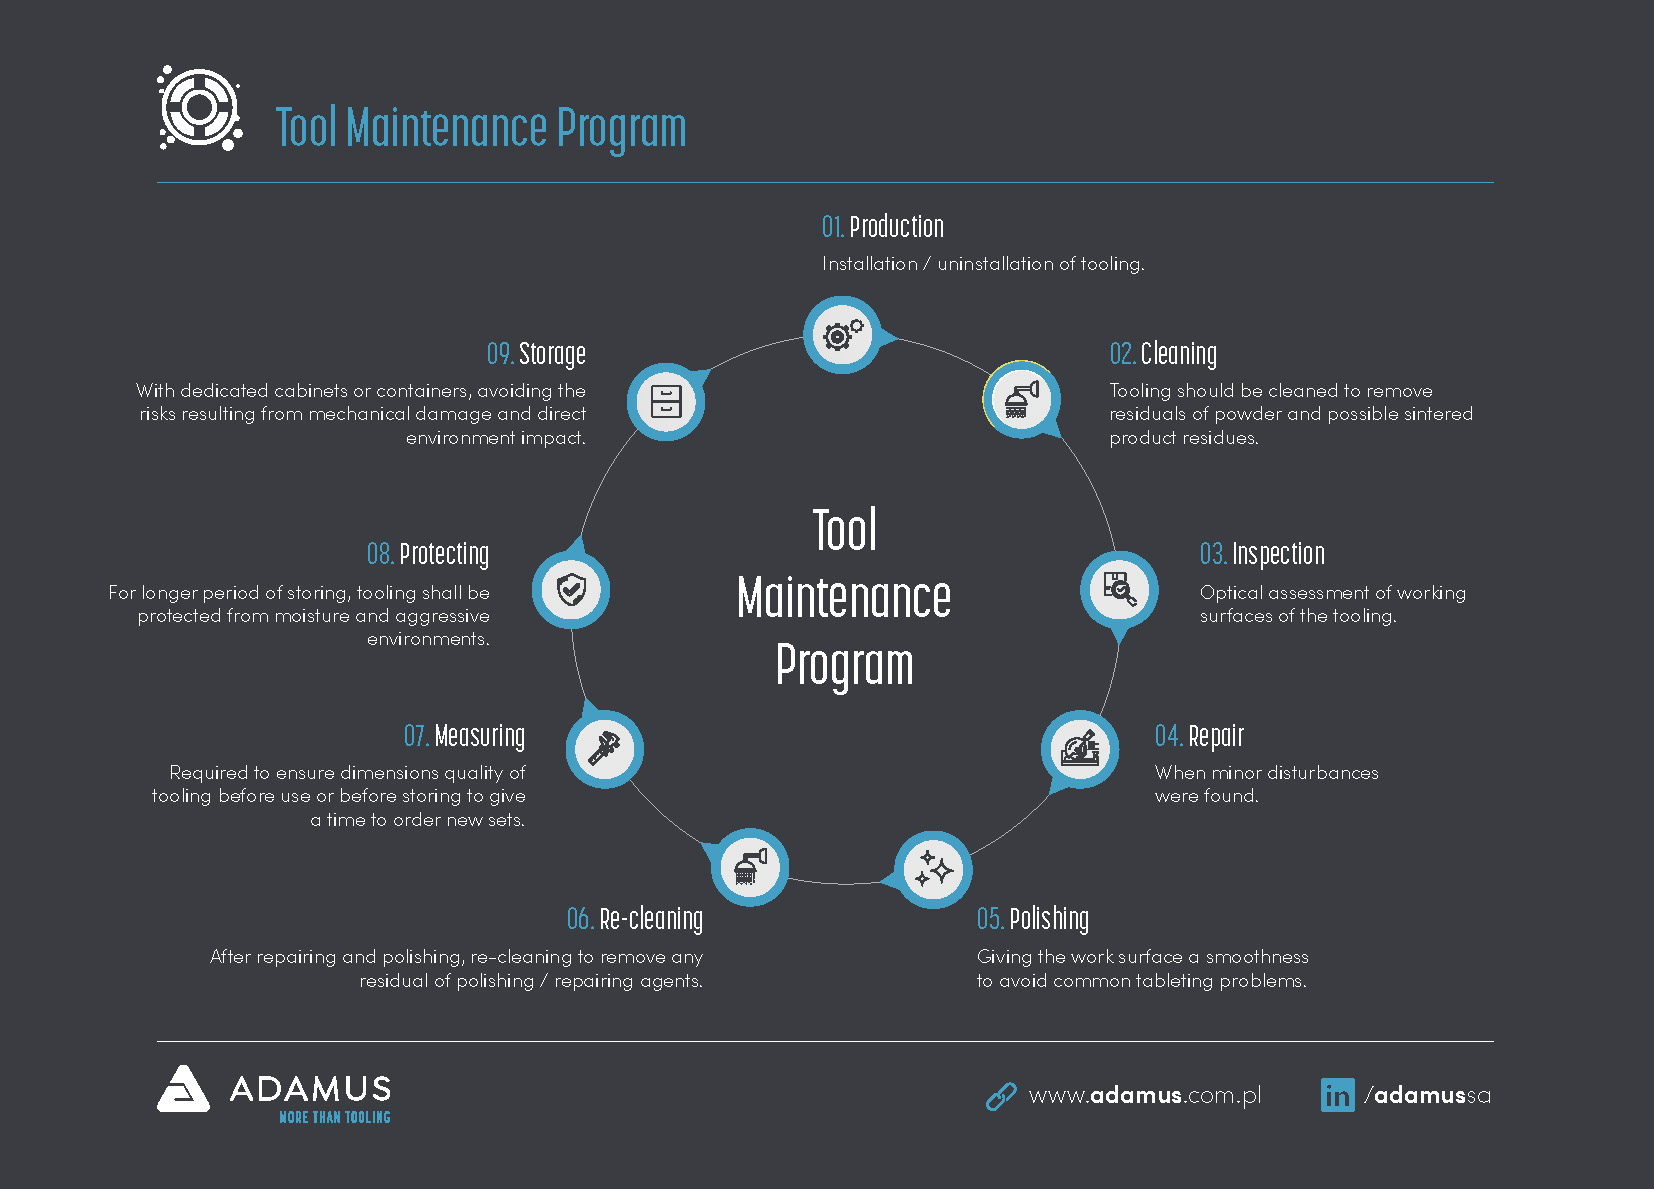 Tool Maintenance Program by Adamus